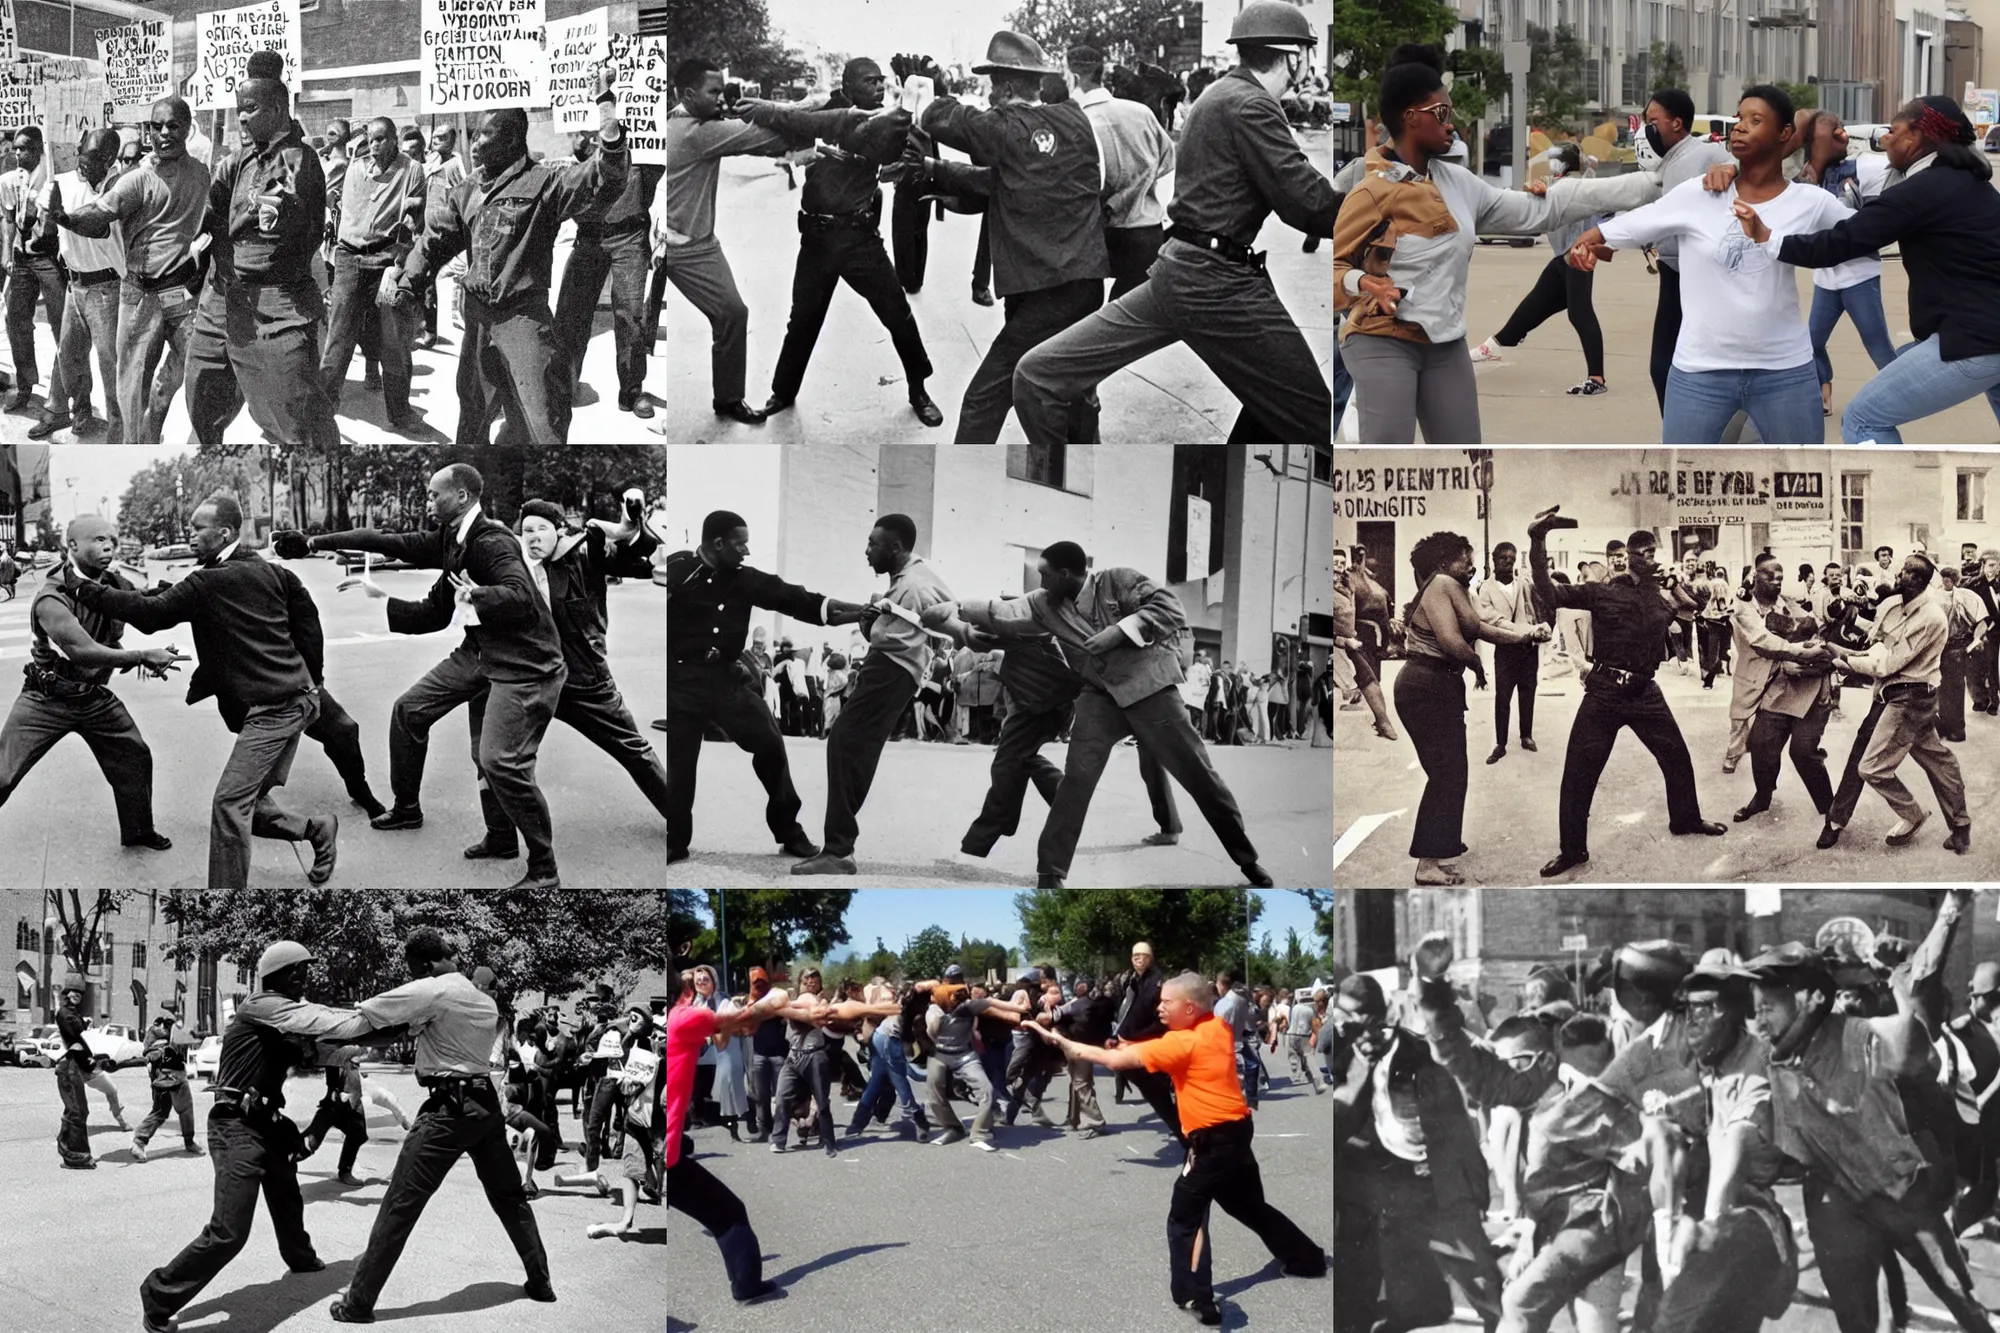 Prompt: Civil rights self-defense